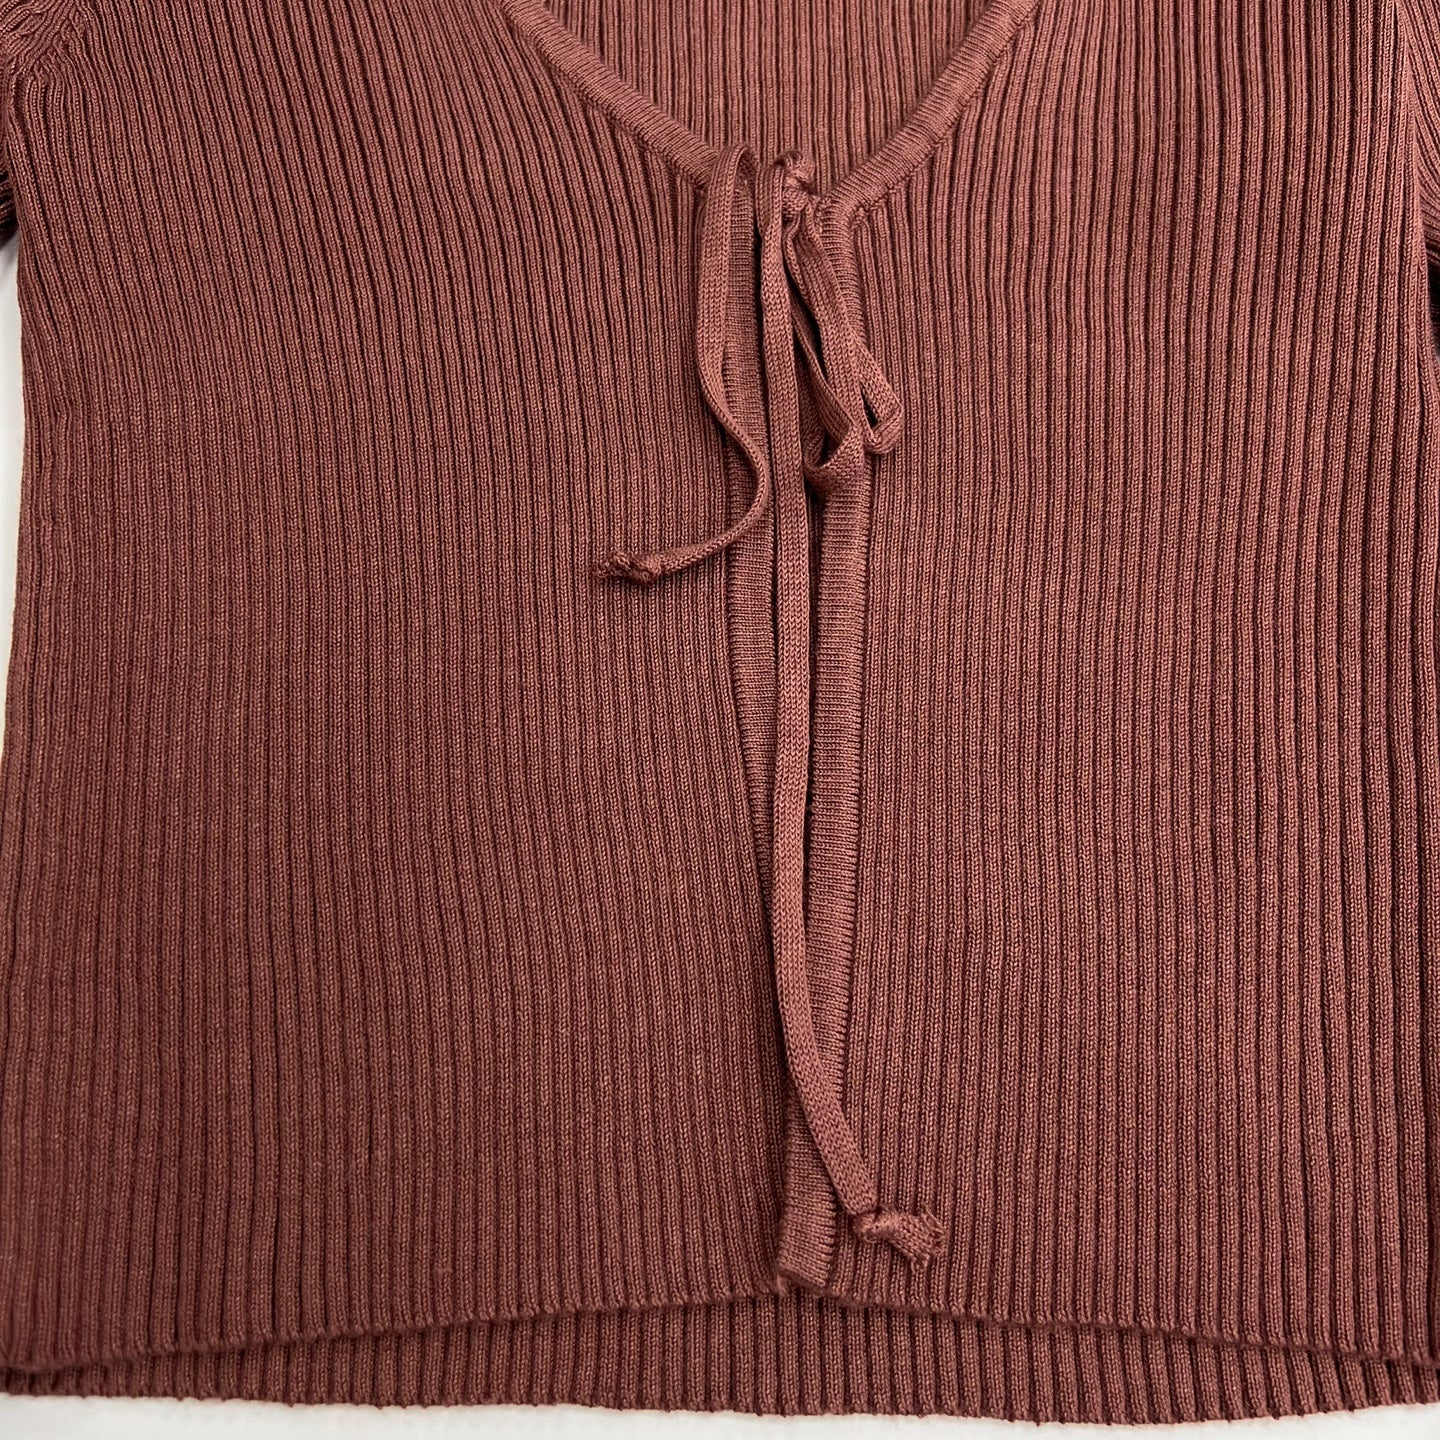 Women's V-neck Knit Top